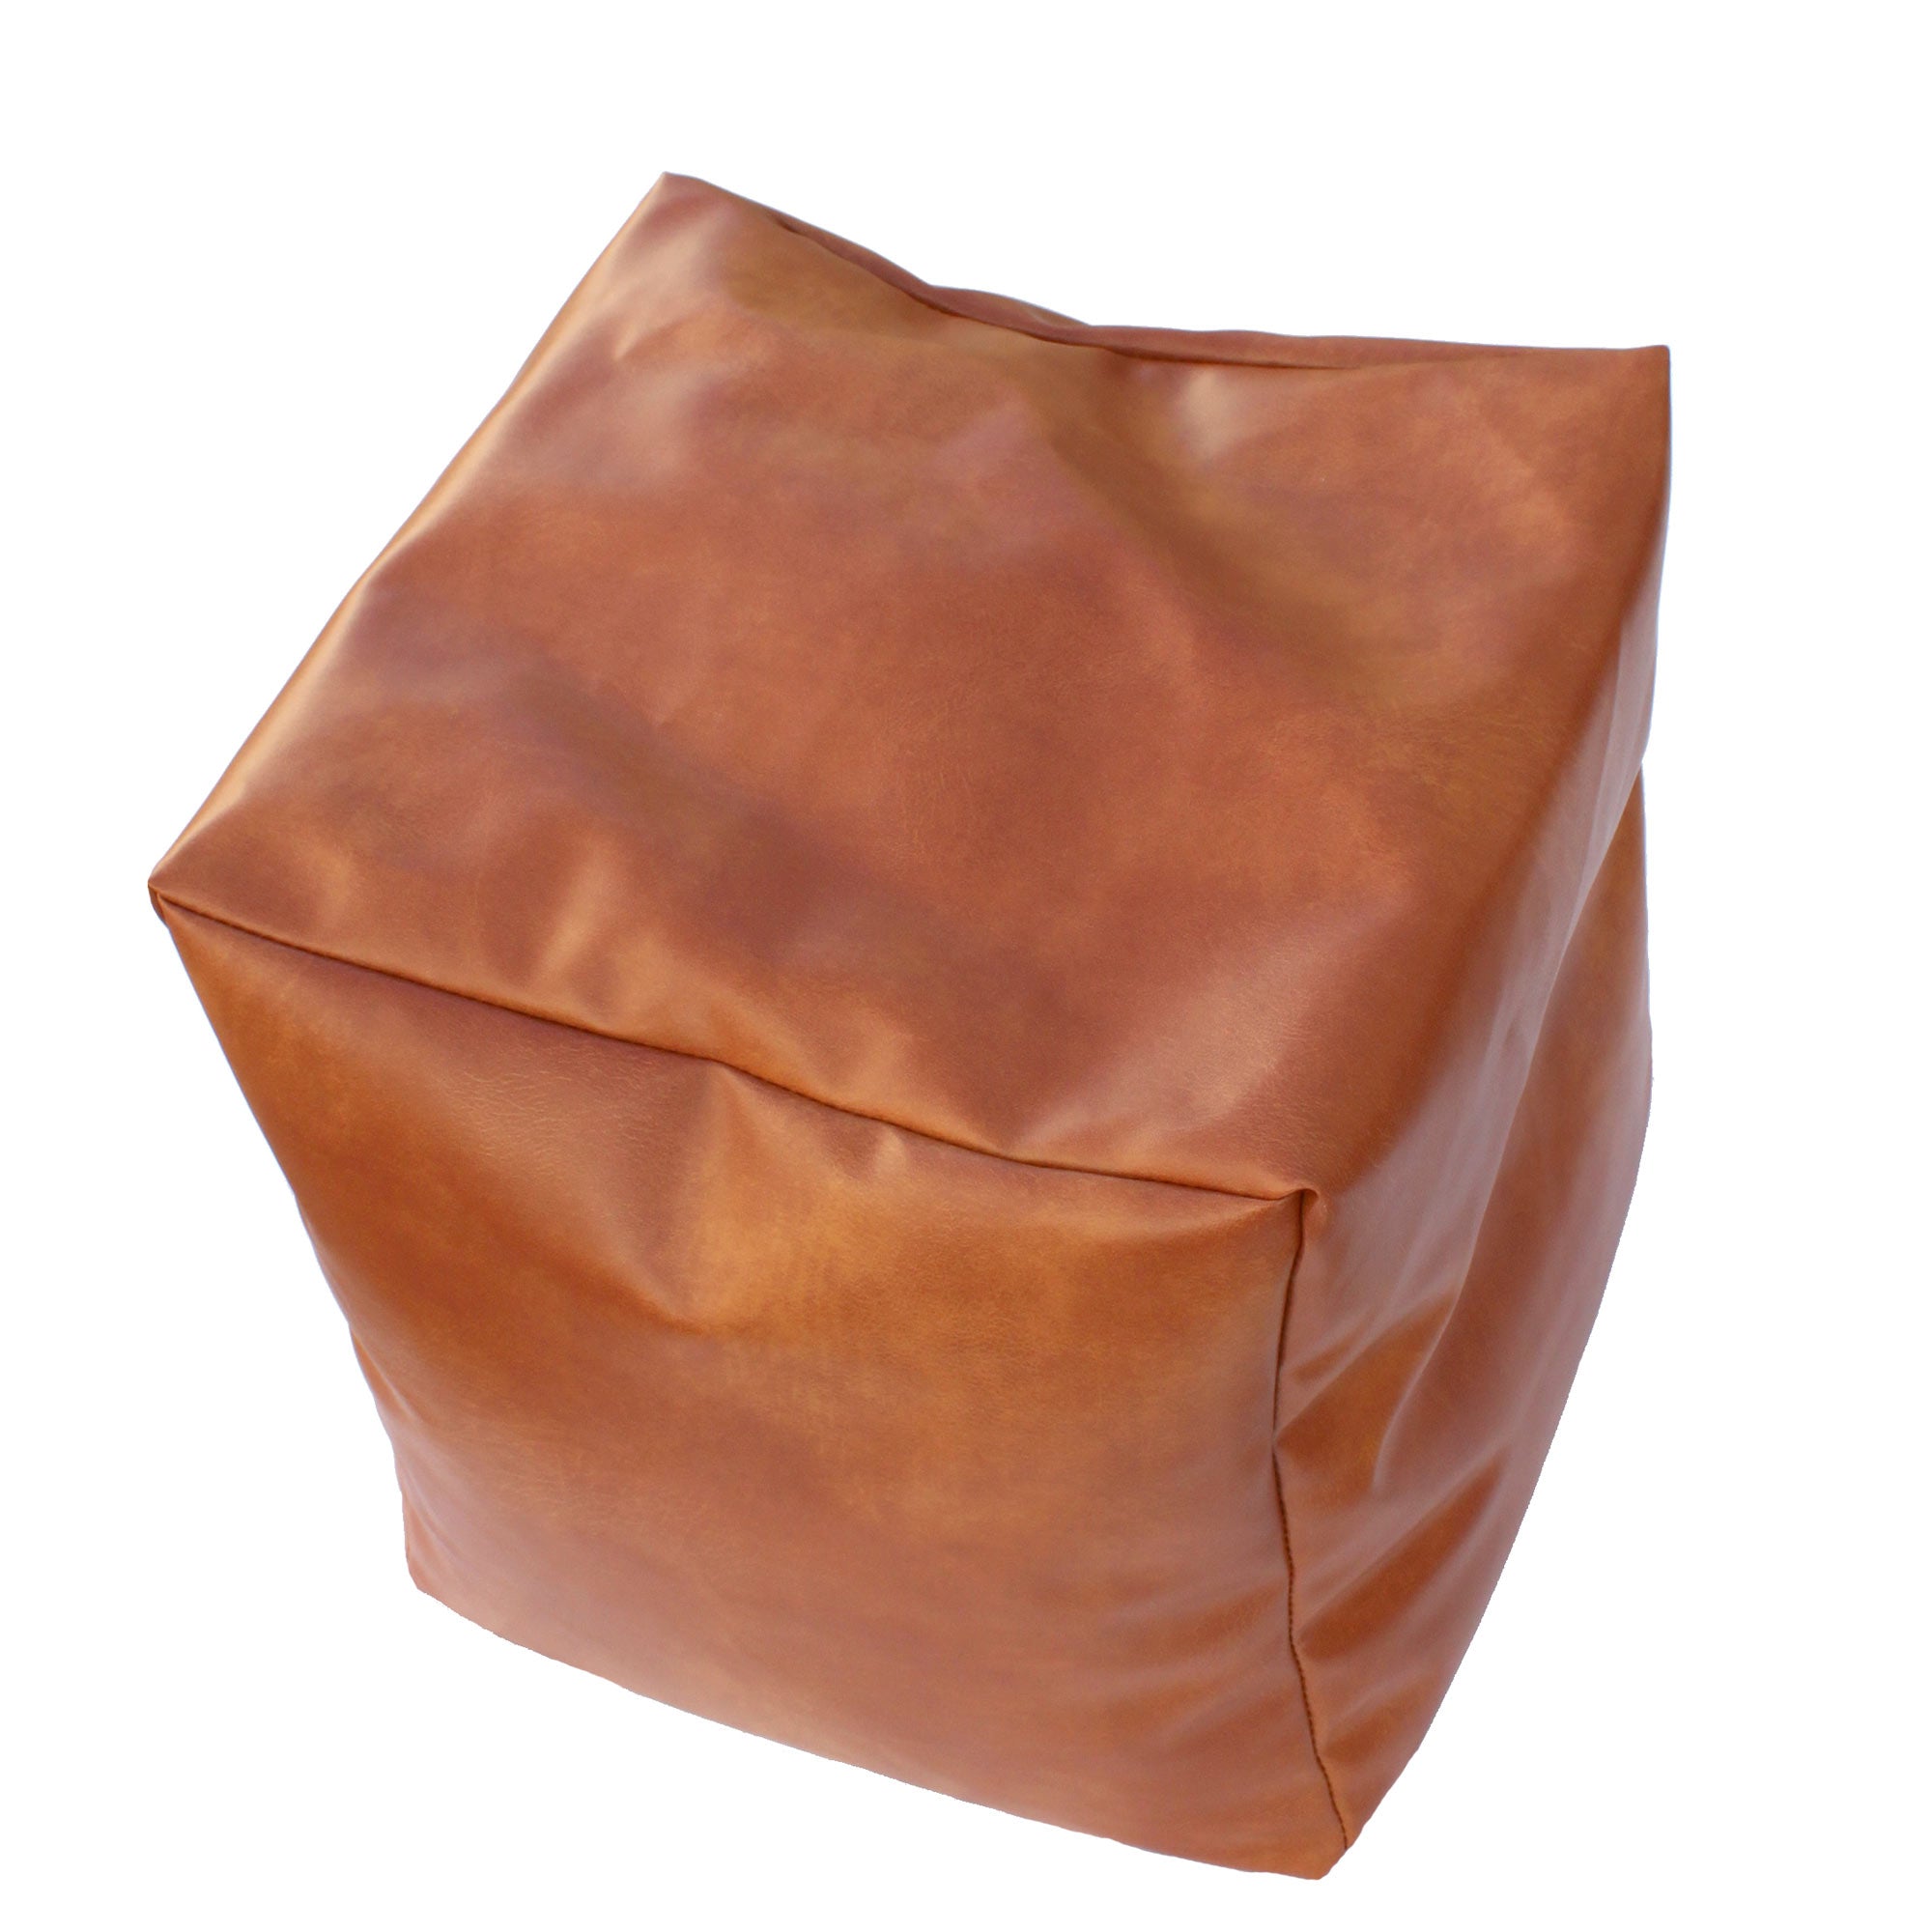 Bean bag cubic pentru copii